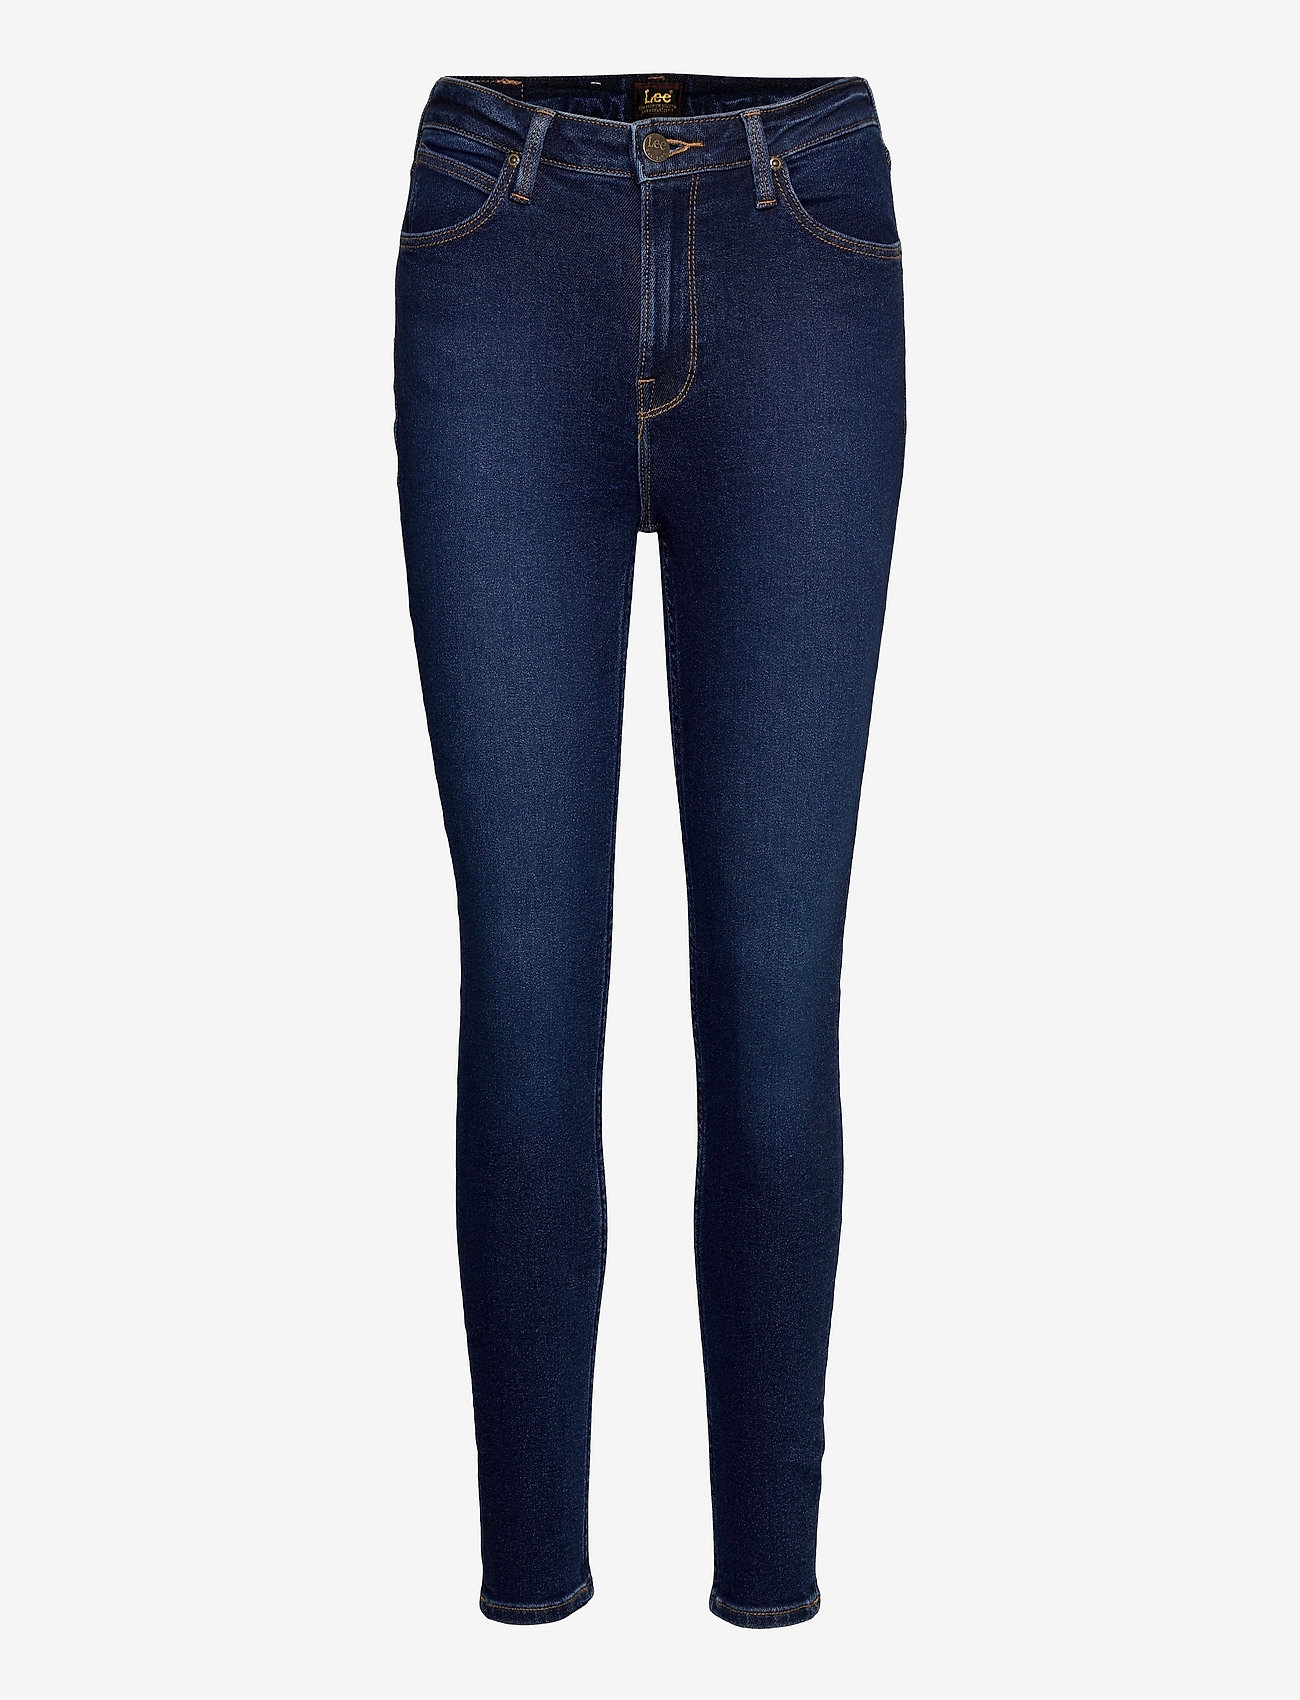 Lee Jeans Ivy - Slim jeans Boozt.com